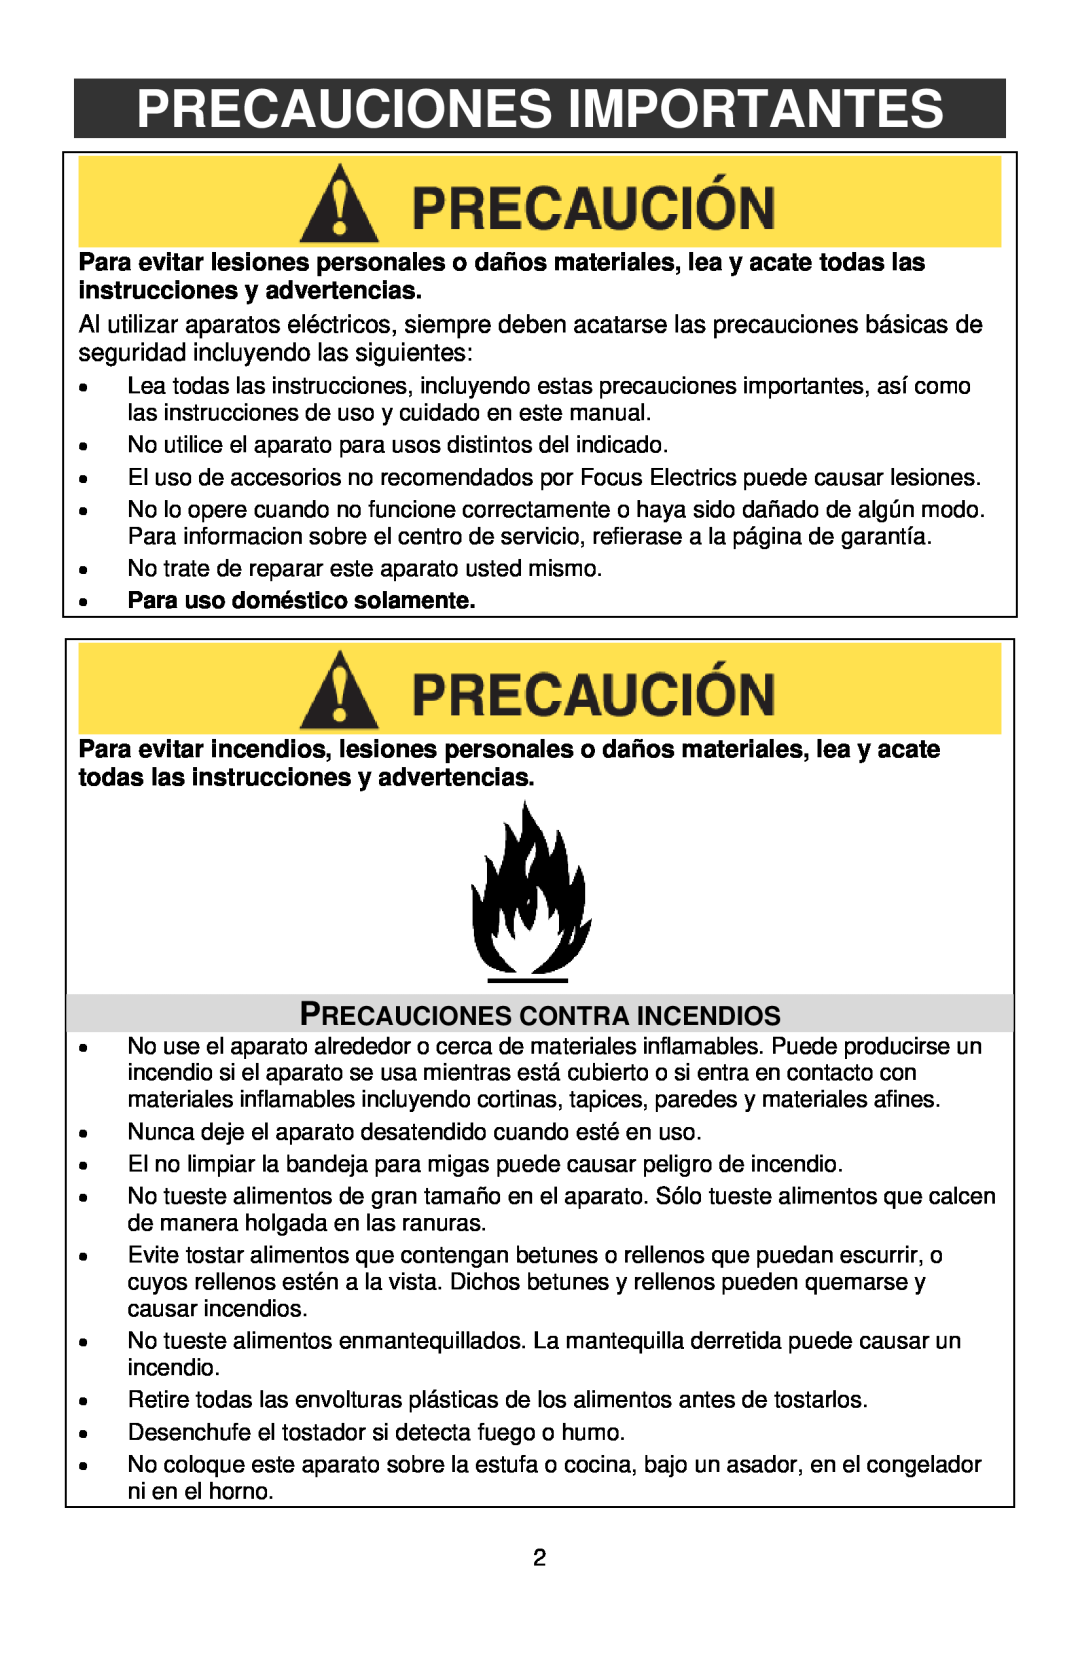 West Bend L5559C instruction manual Precauciones Importantes, Precauciones Contra Incendios 